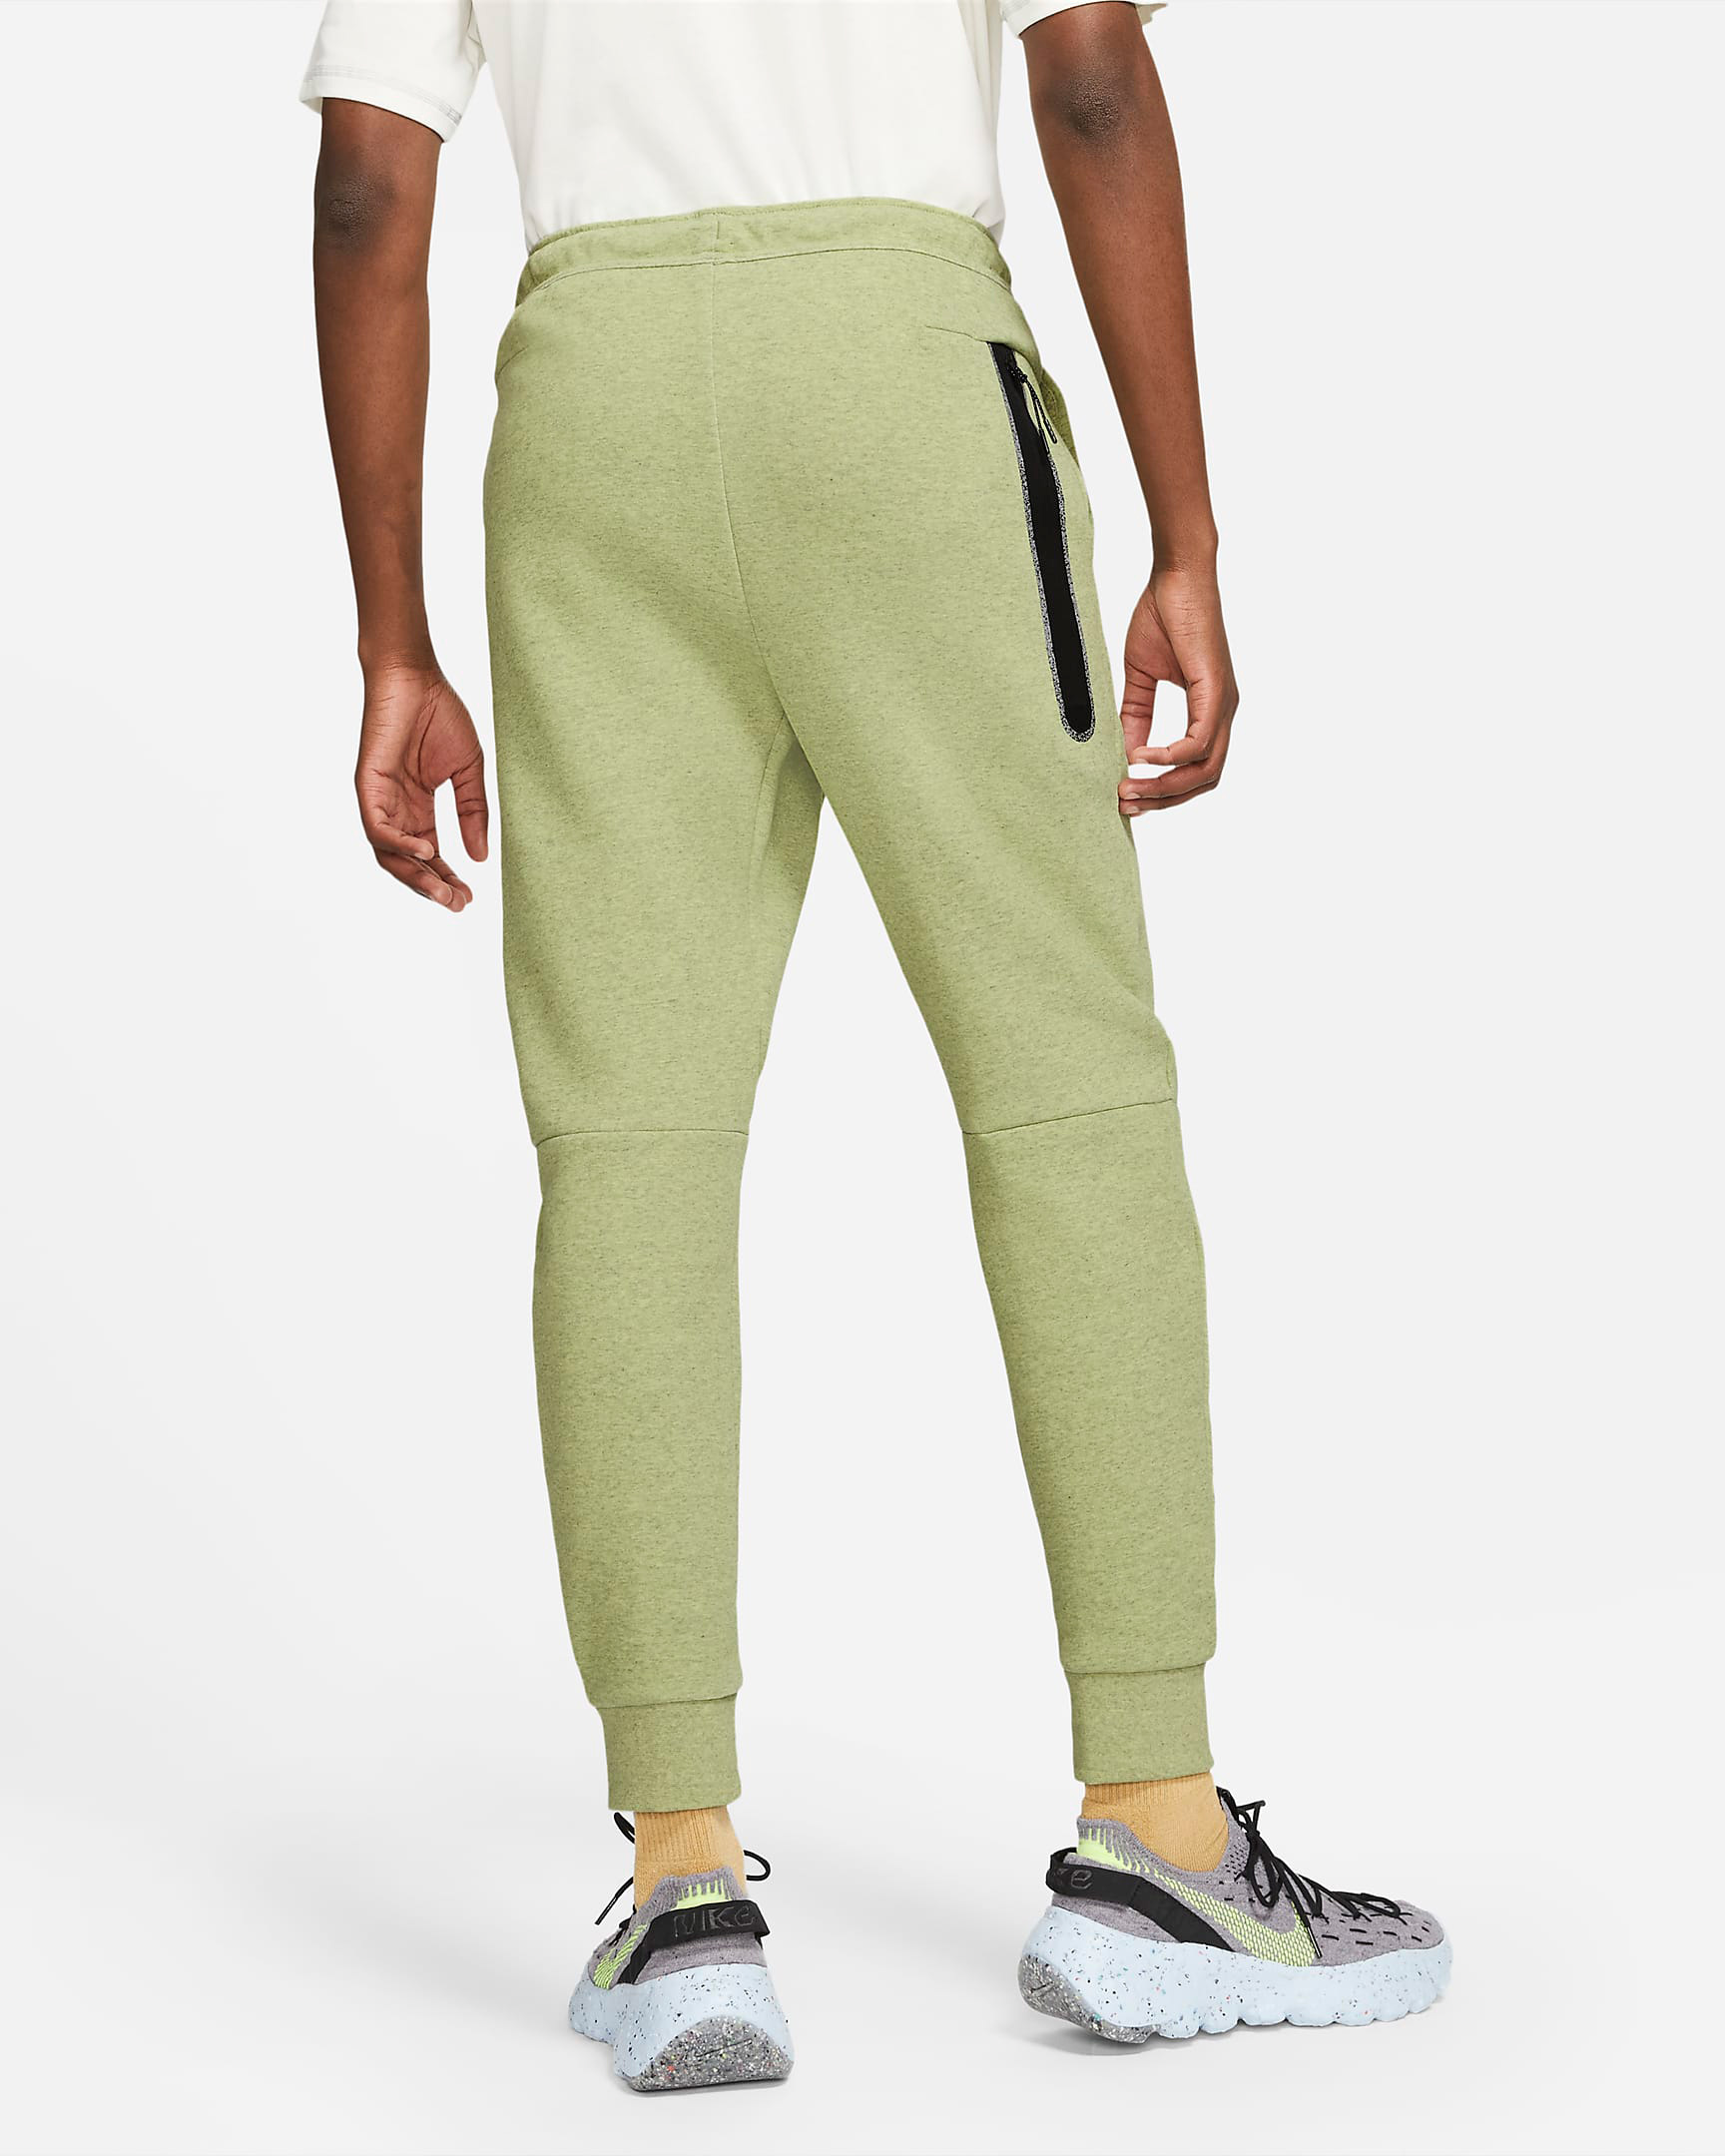 Nike Air Max Terrascape Plus Black Lime Shirts Clothing